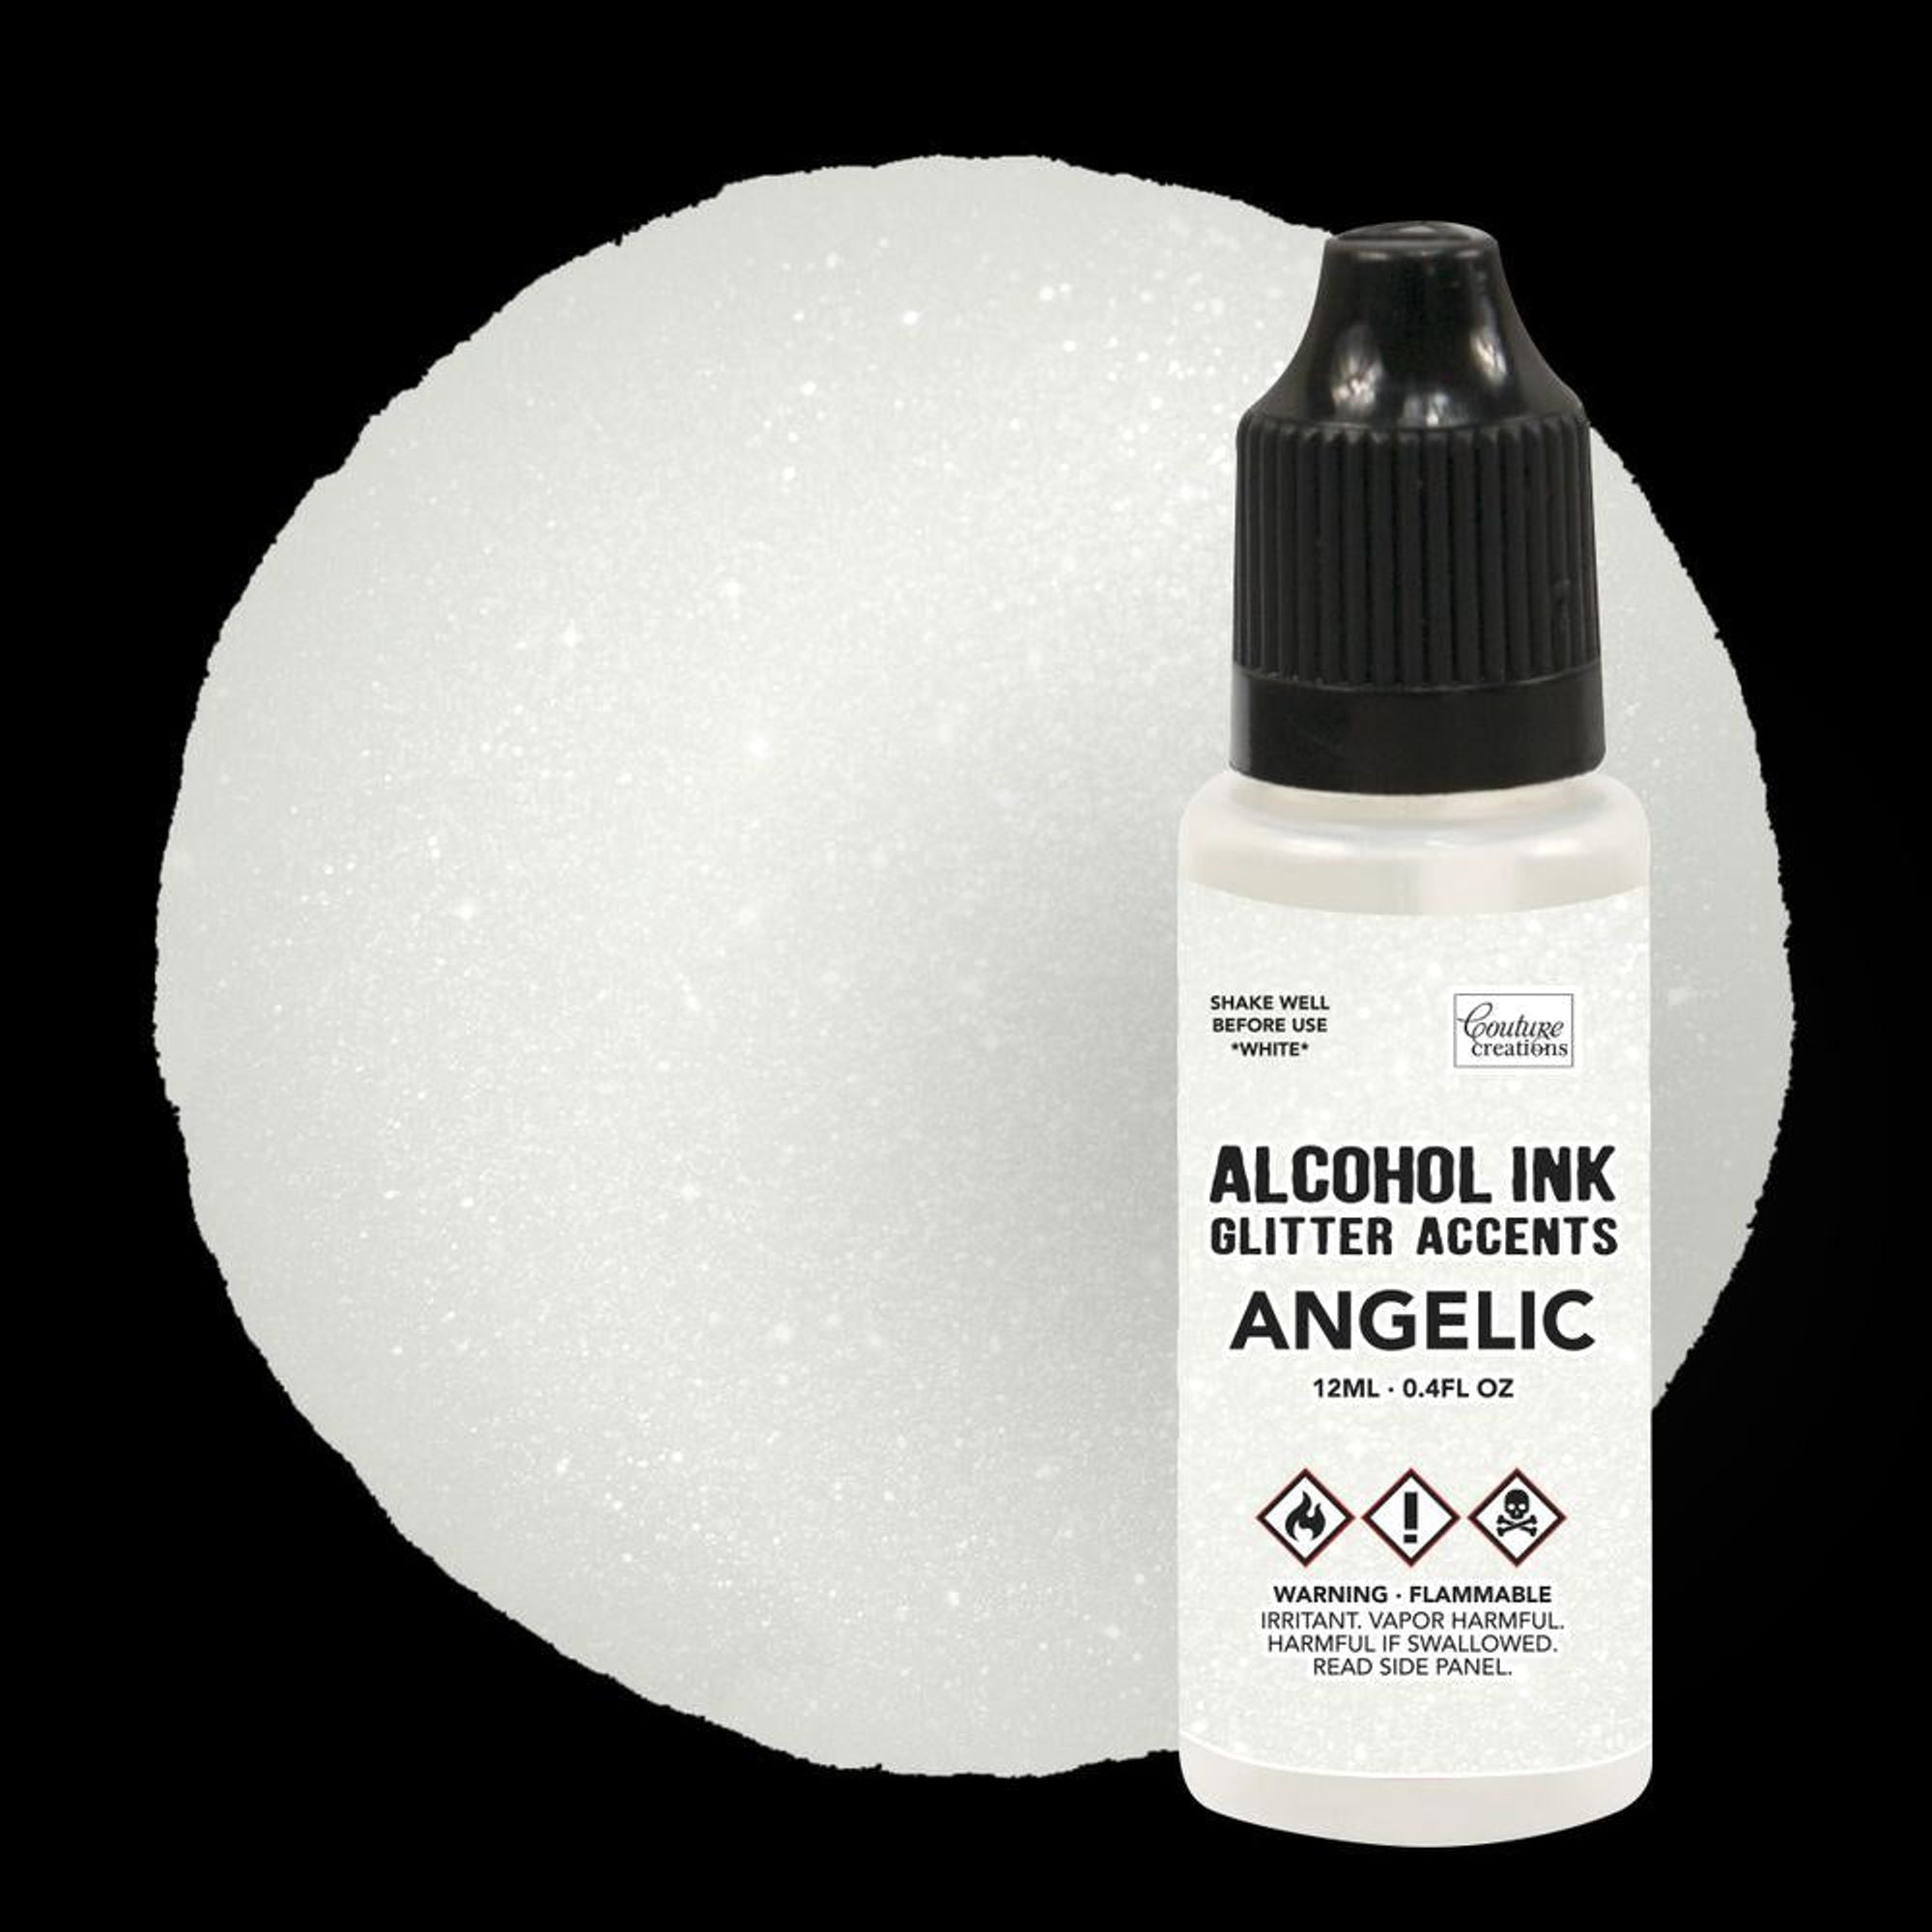 Alcohol Ink Sparkle & Shine Set